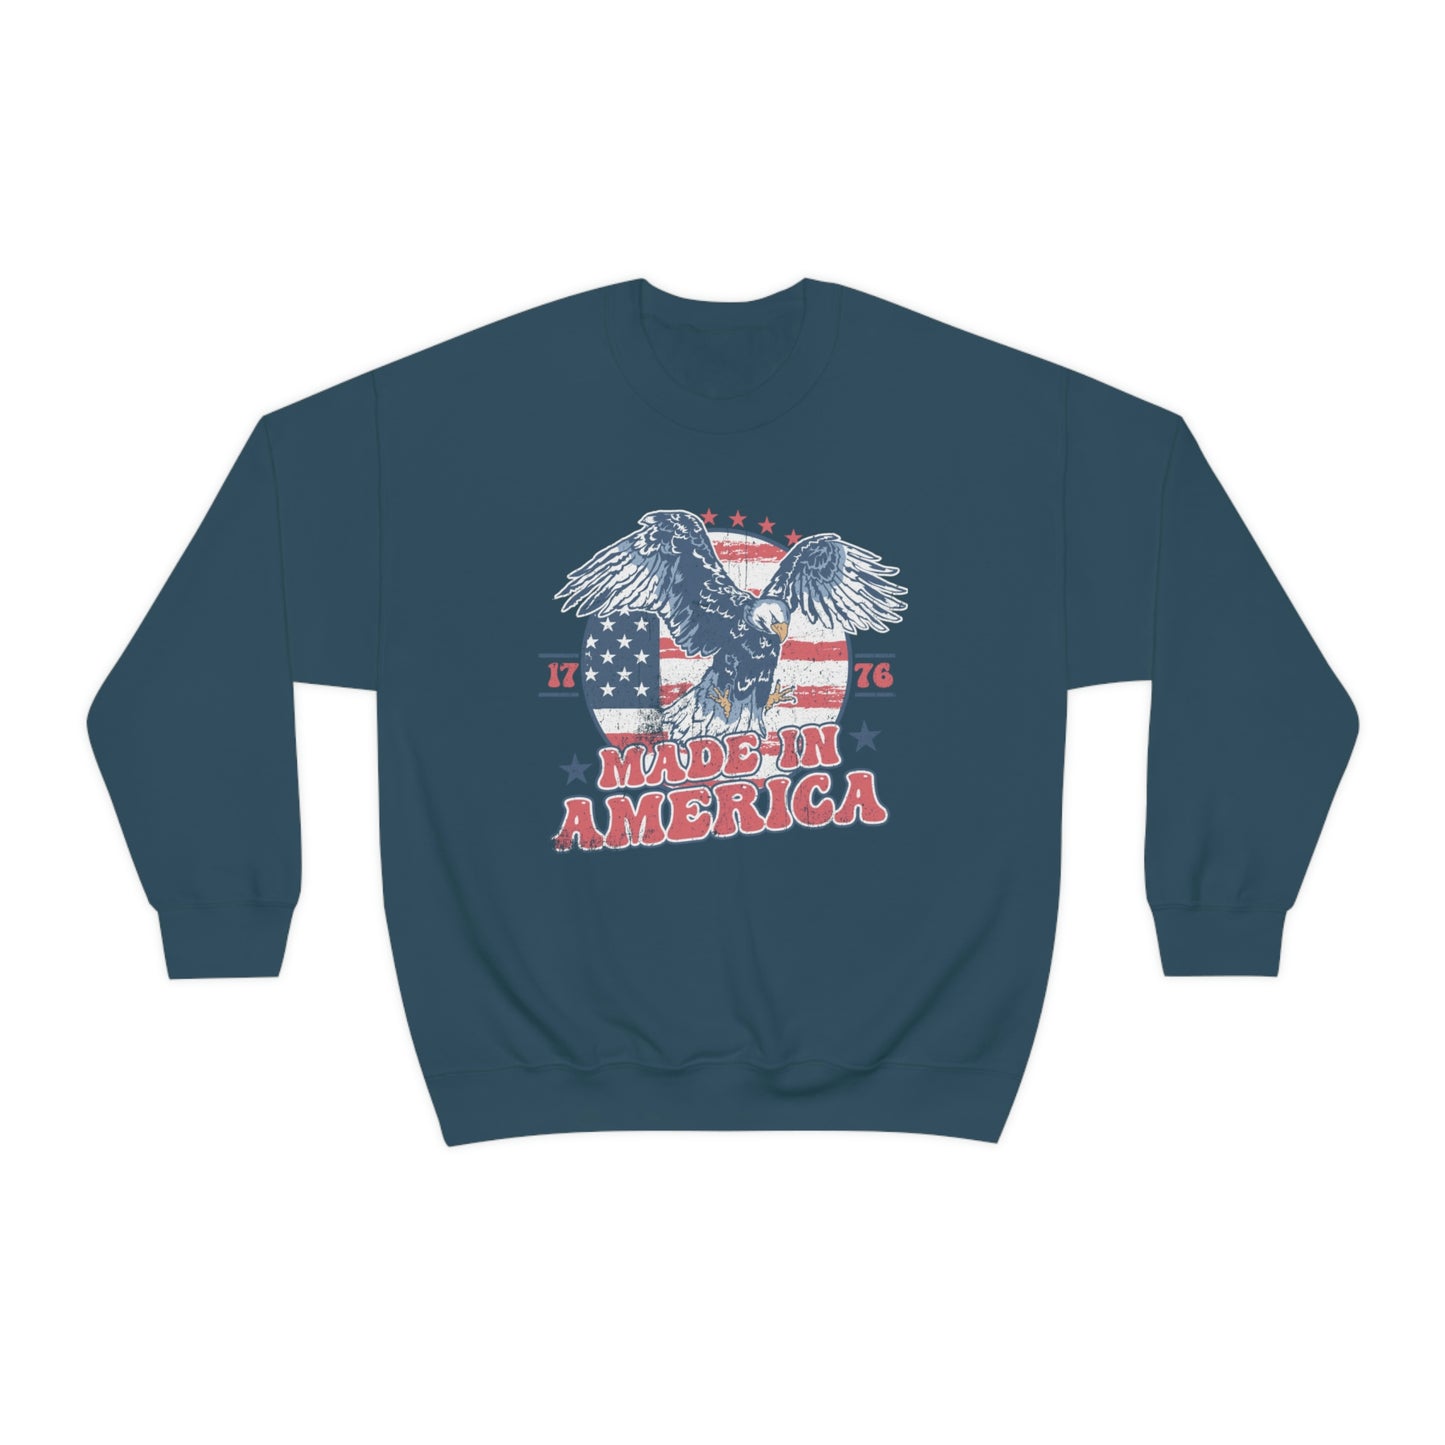 "Made in America" Unisex Crewneck Sweatshirt